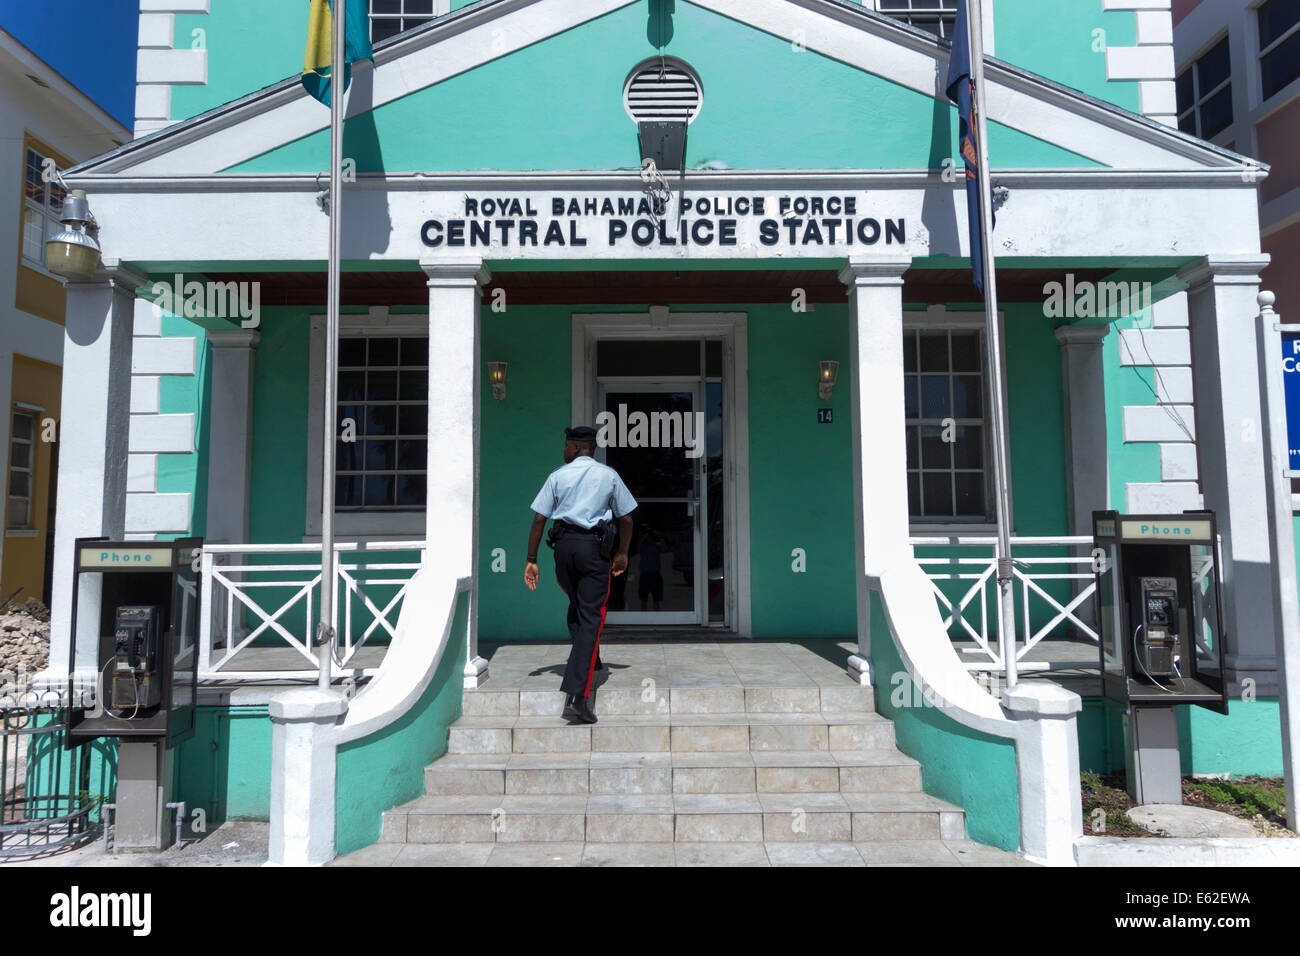 Central Police Station, Royal Bahamas Police Force, Nassau, Providence Island, The Bahamas Stock Photo